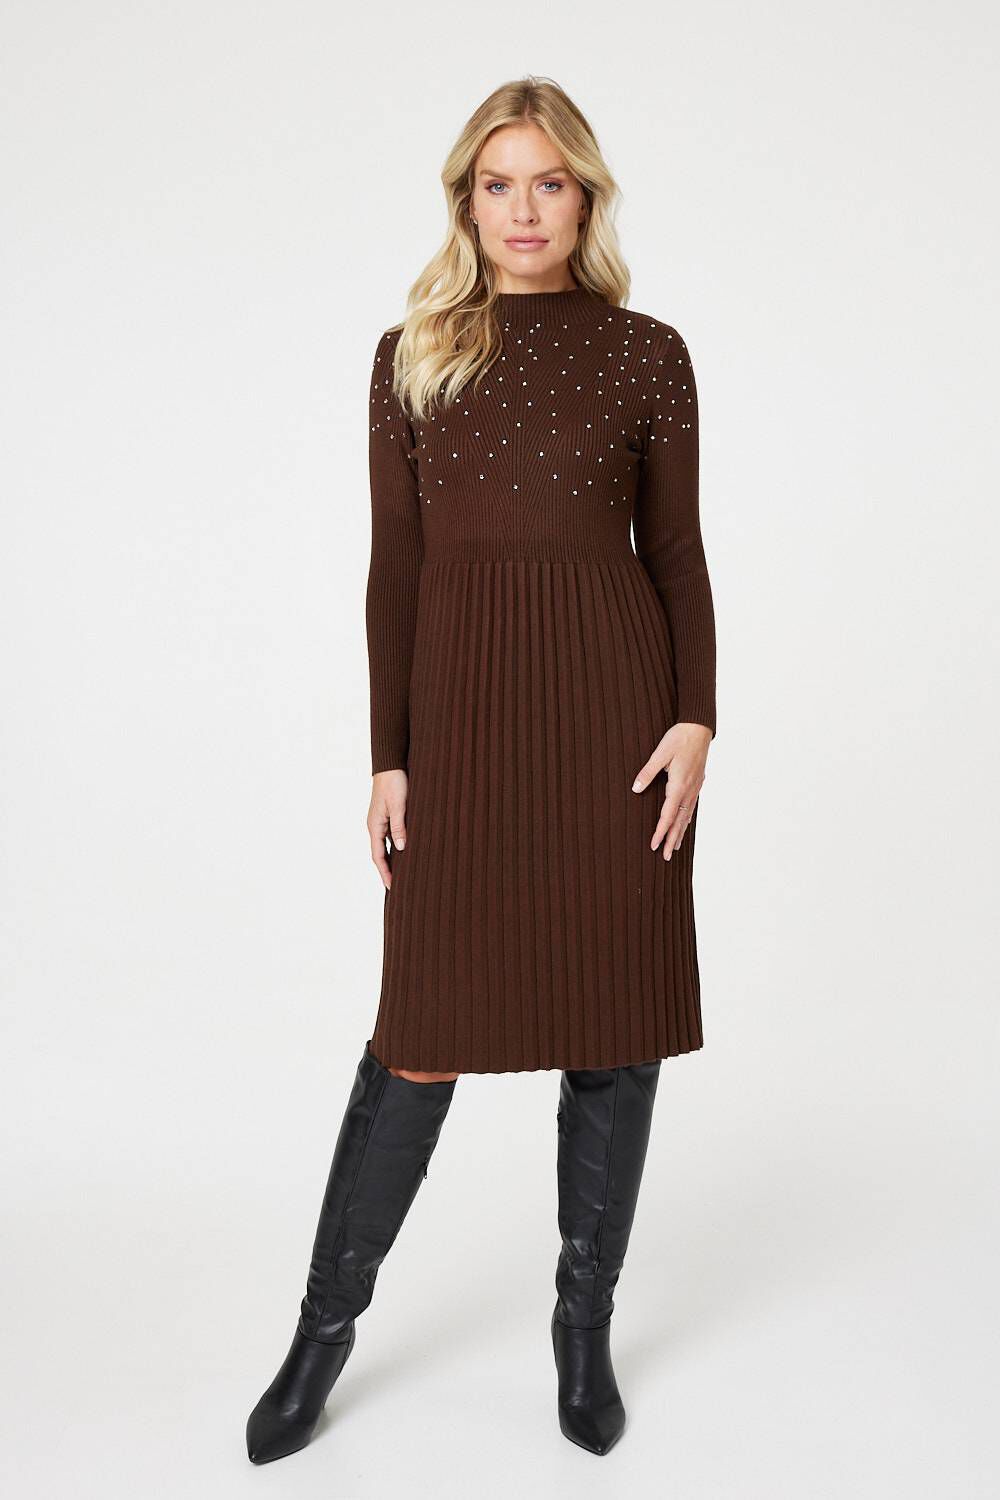 Izabel London Chocolate - Embellished High Neck Knit Dress, Size: S